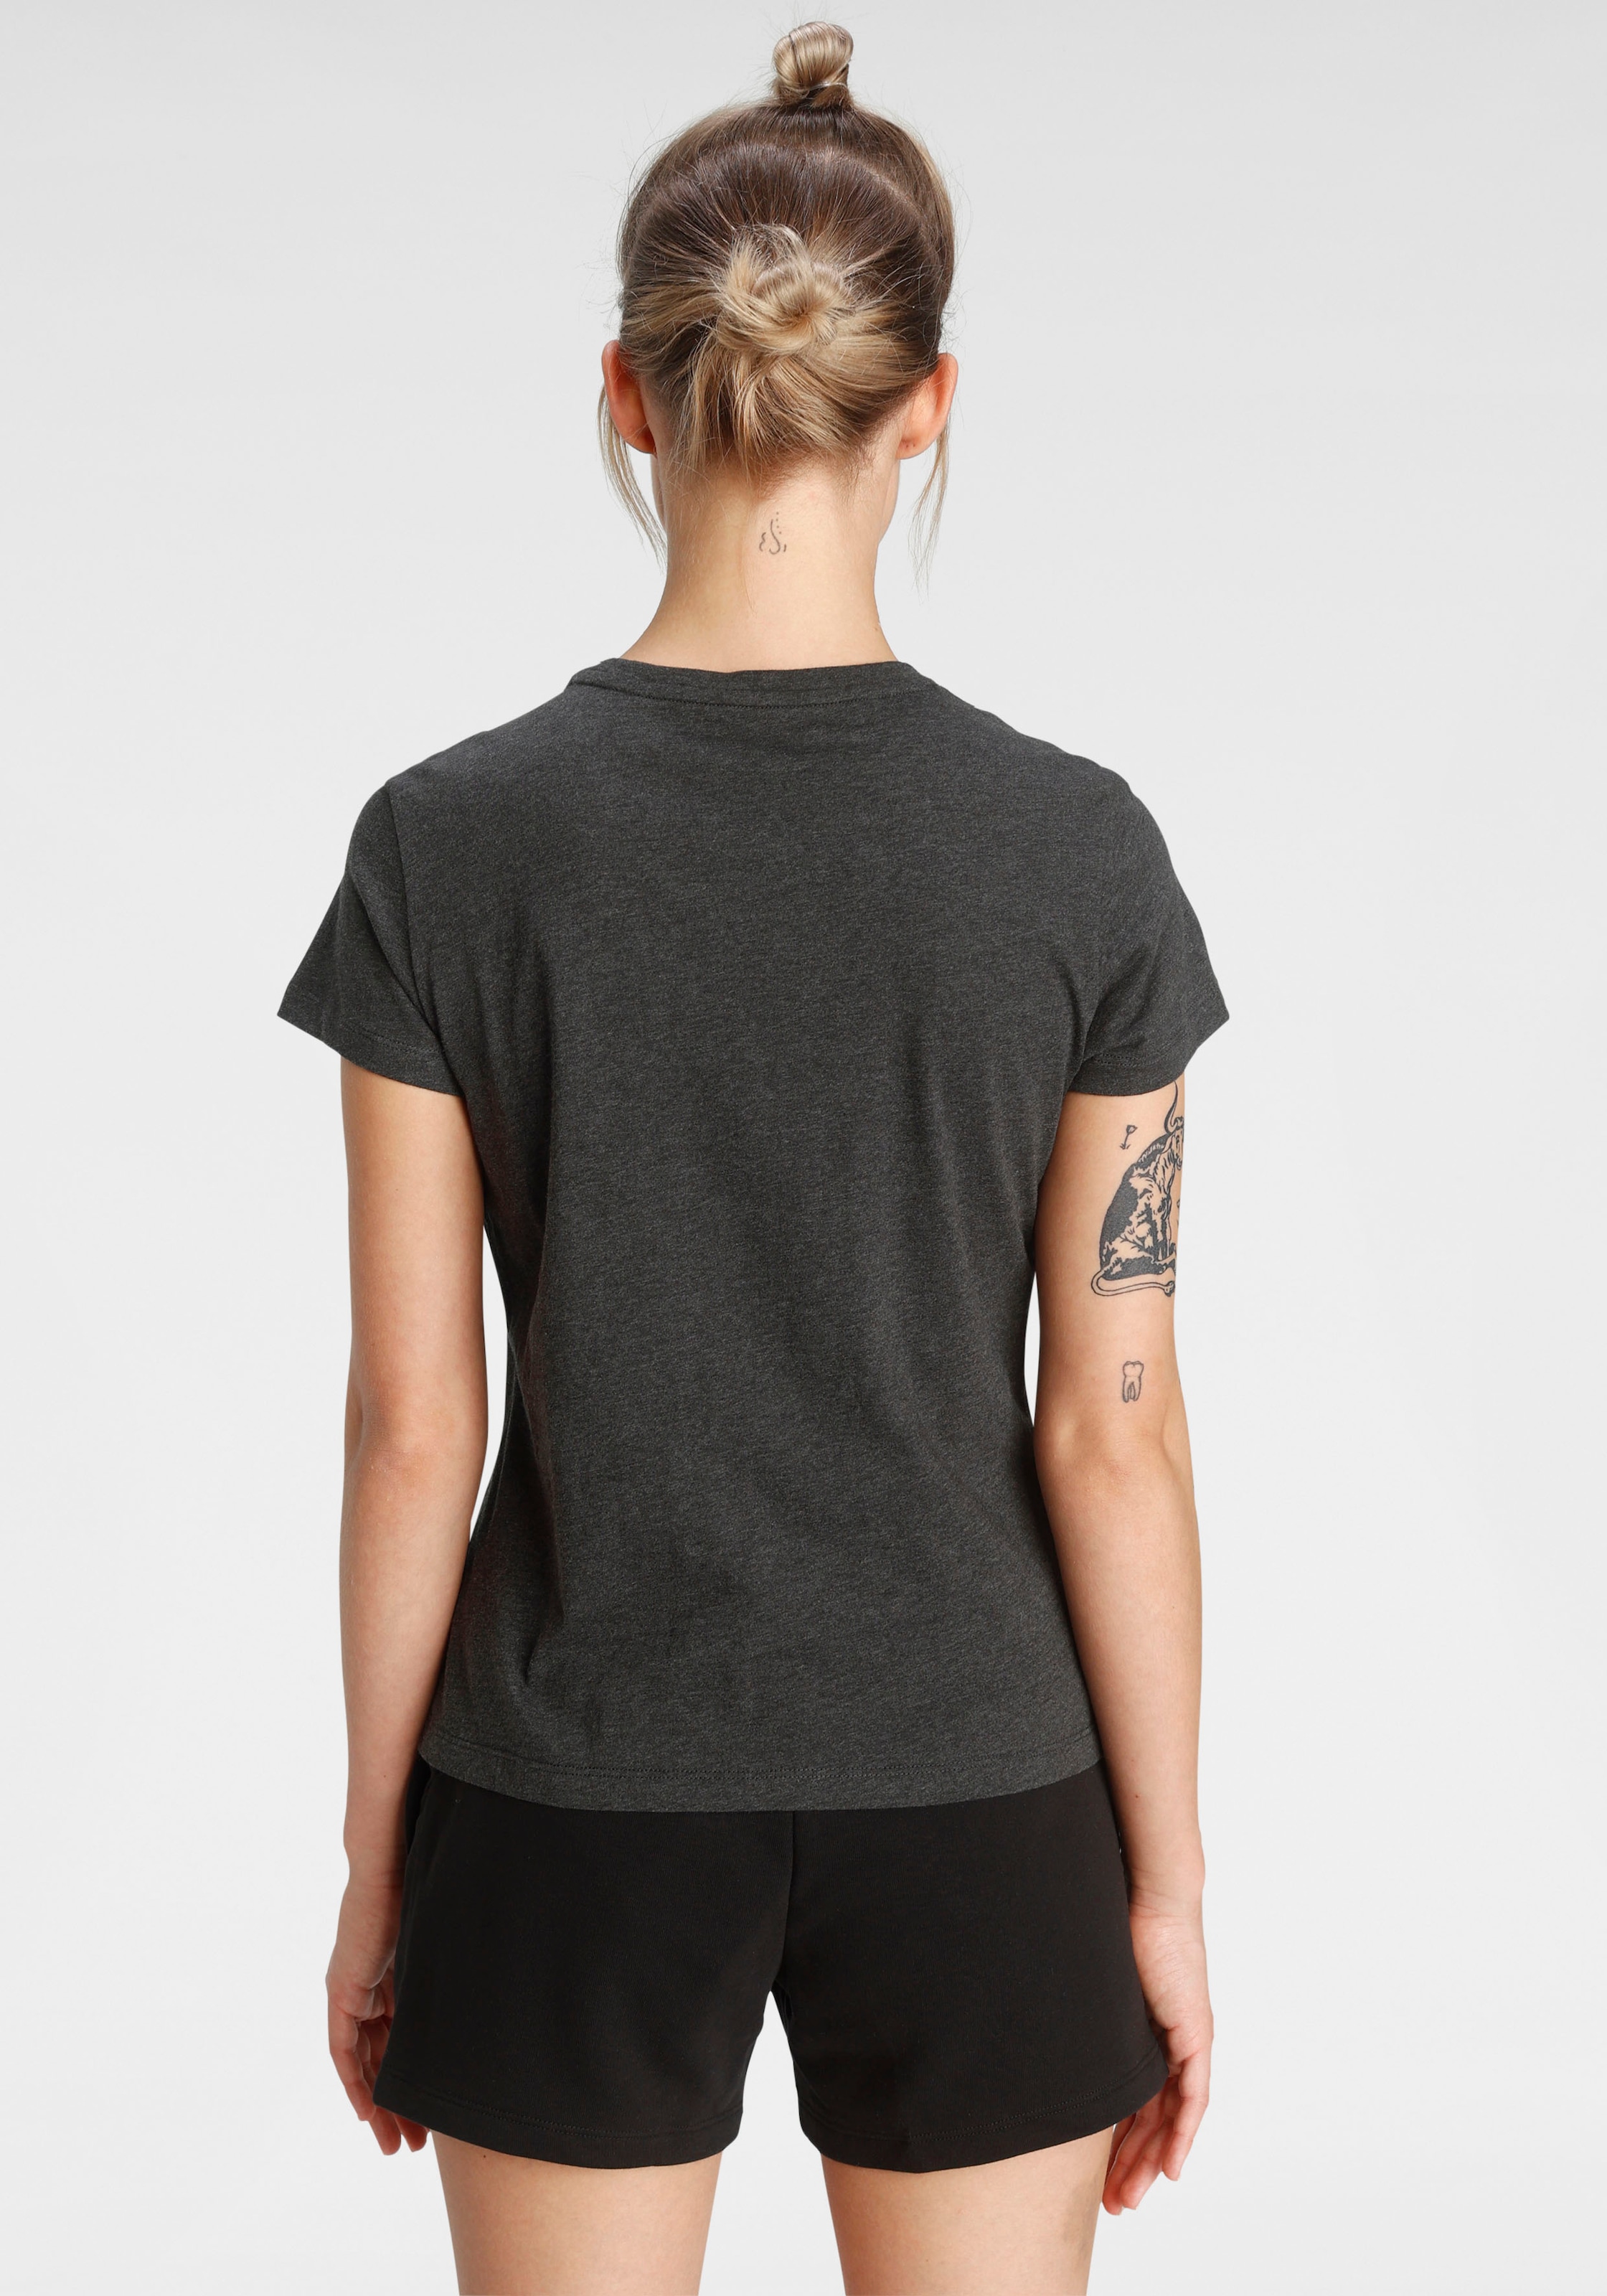 PUMA T-Shirt »ESS LOGO OTTO Shop Online im TEE«